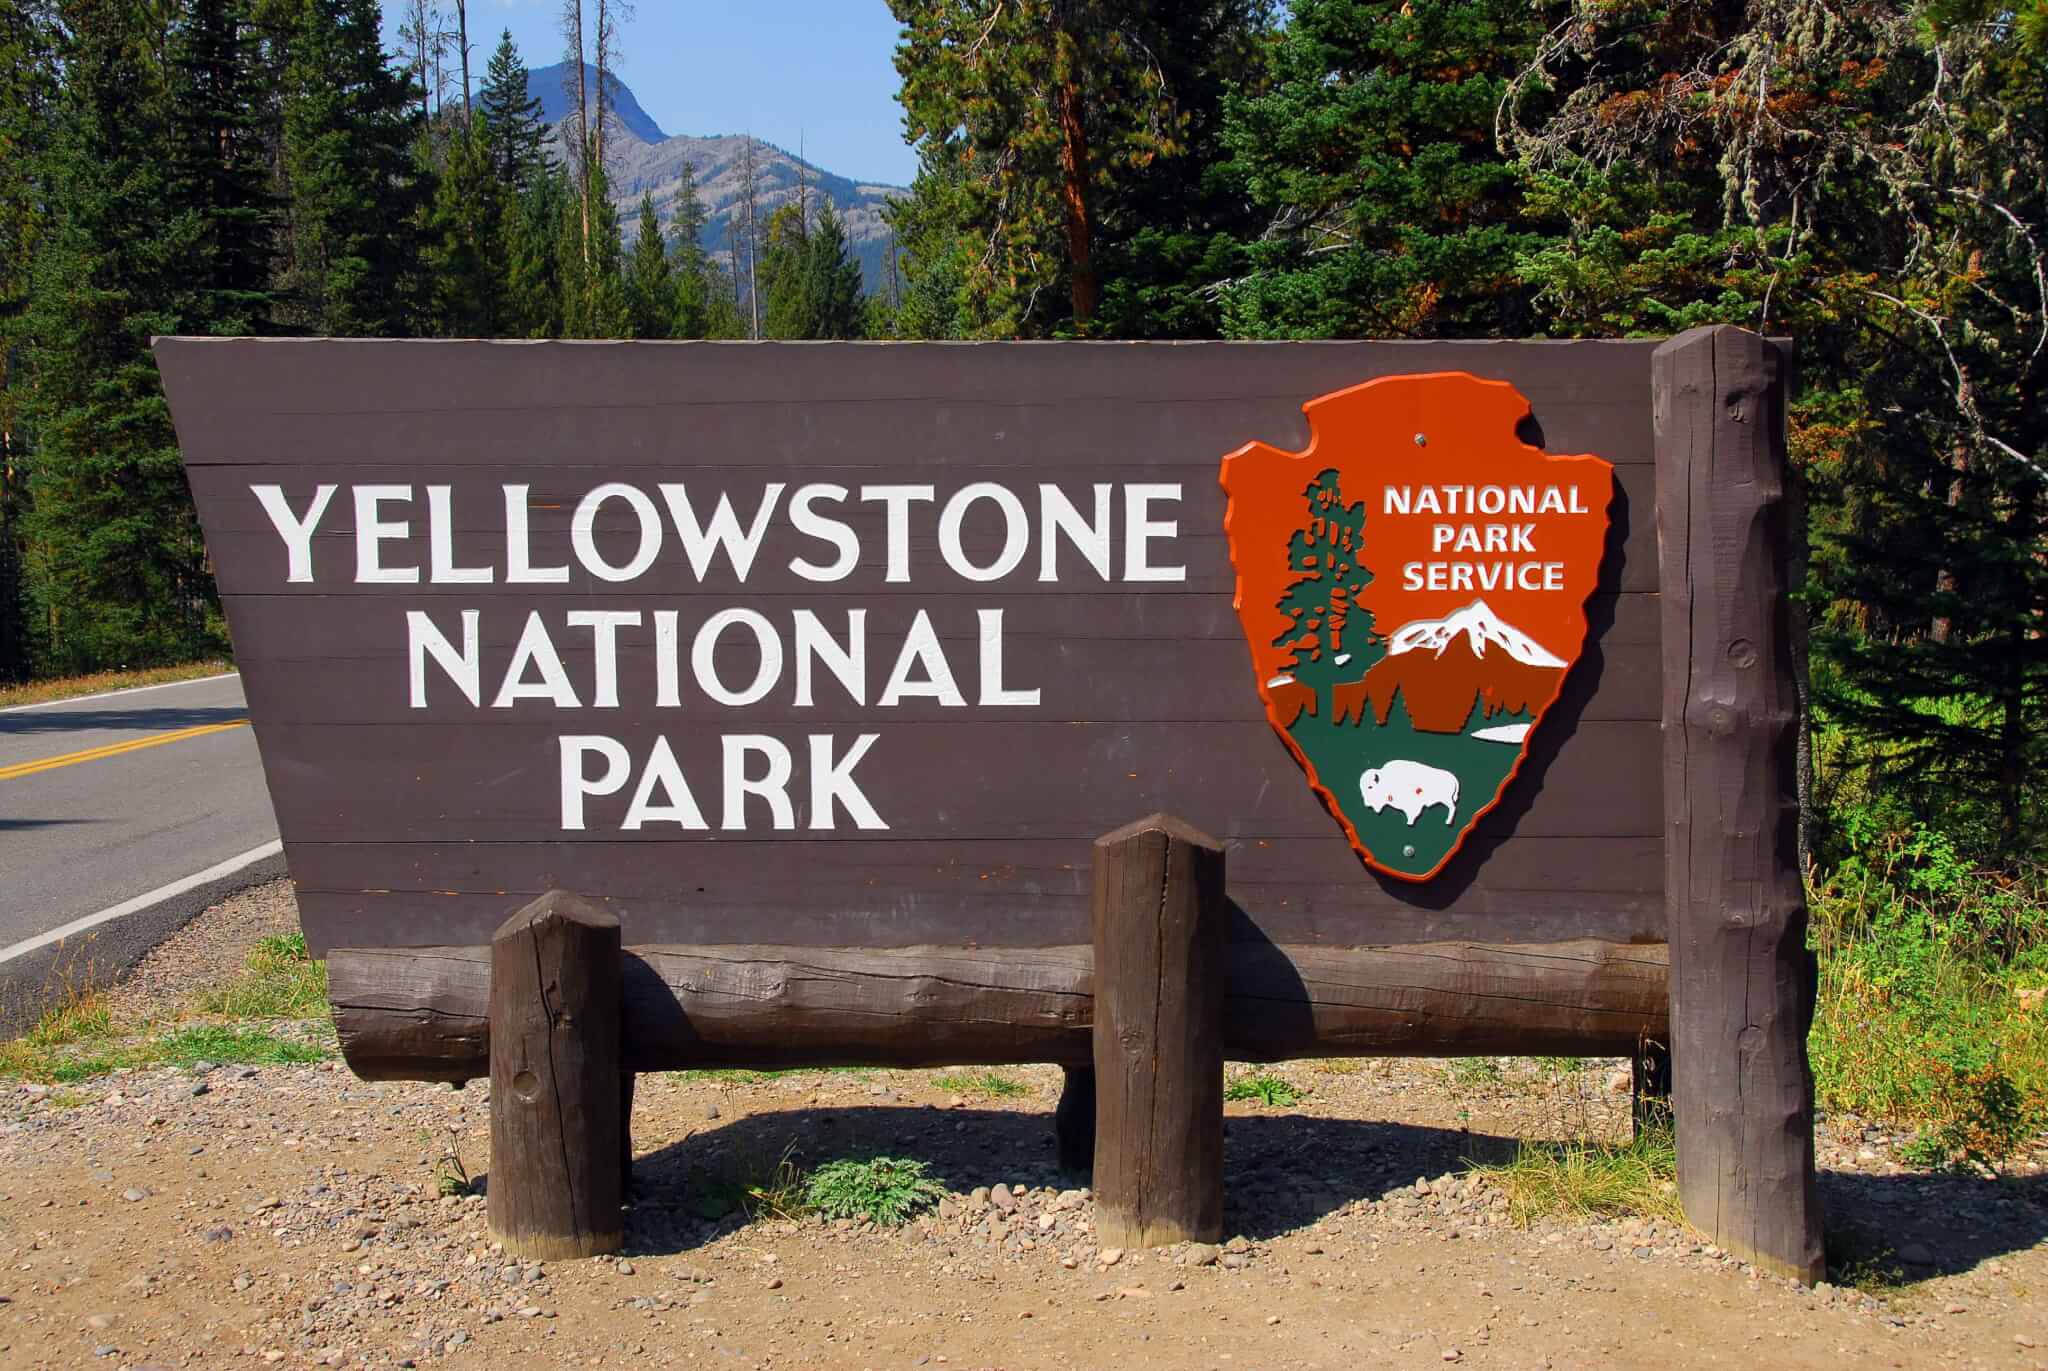 Yellowstone National Park Campsite Photos - Sign